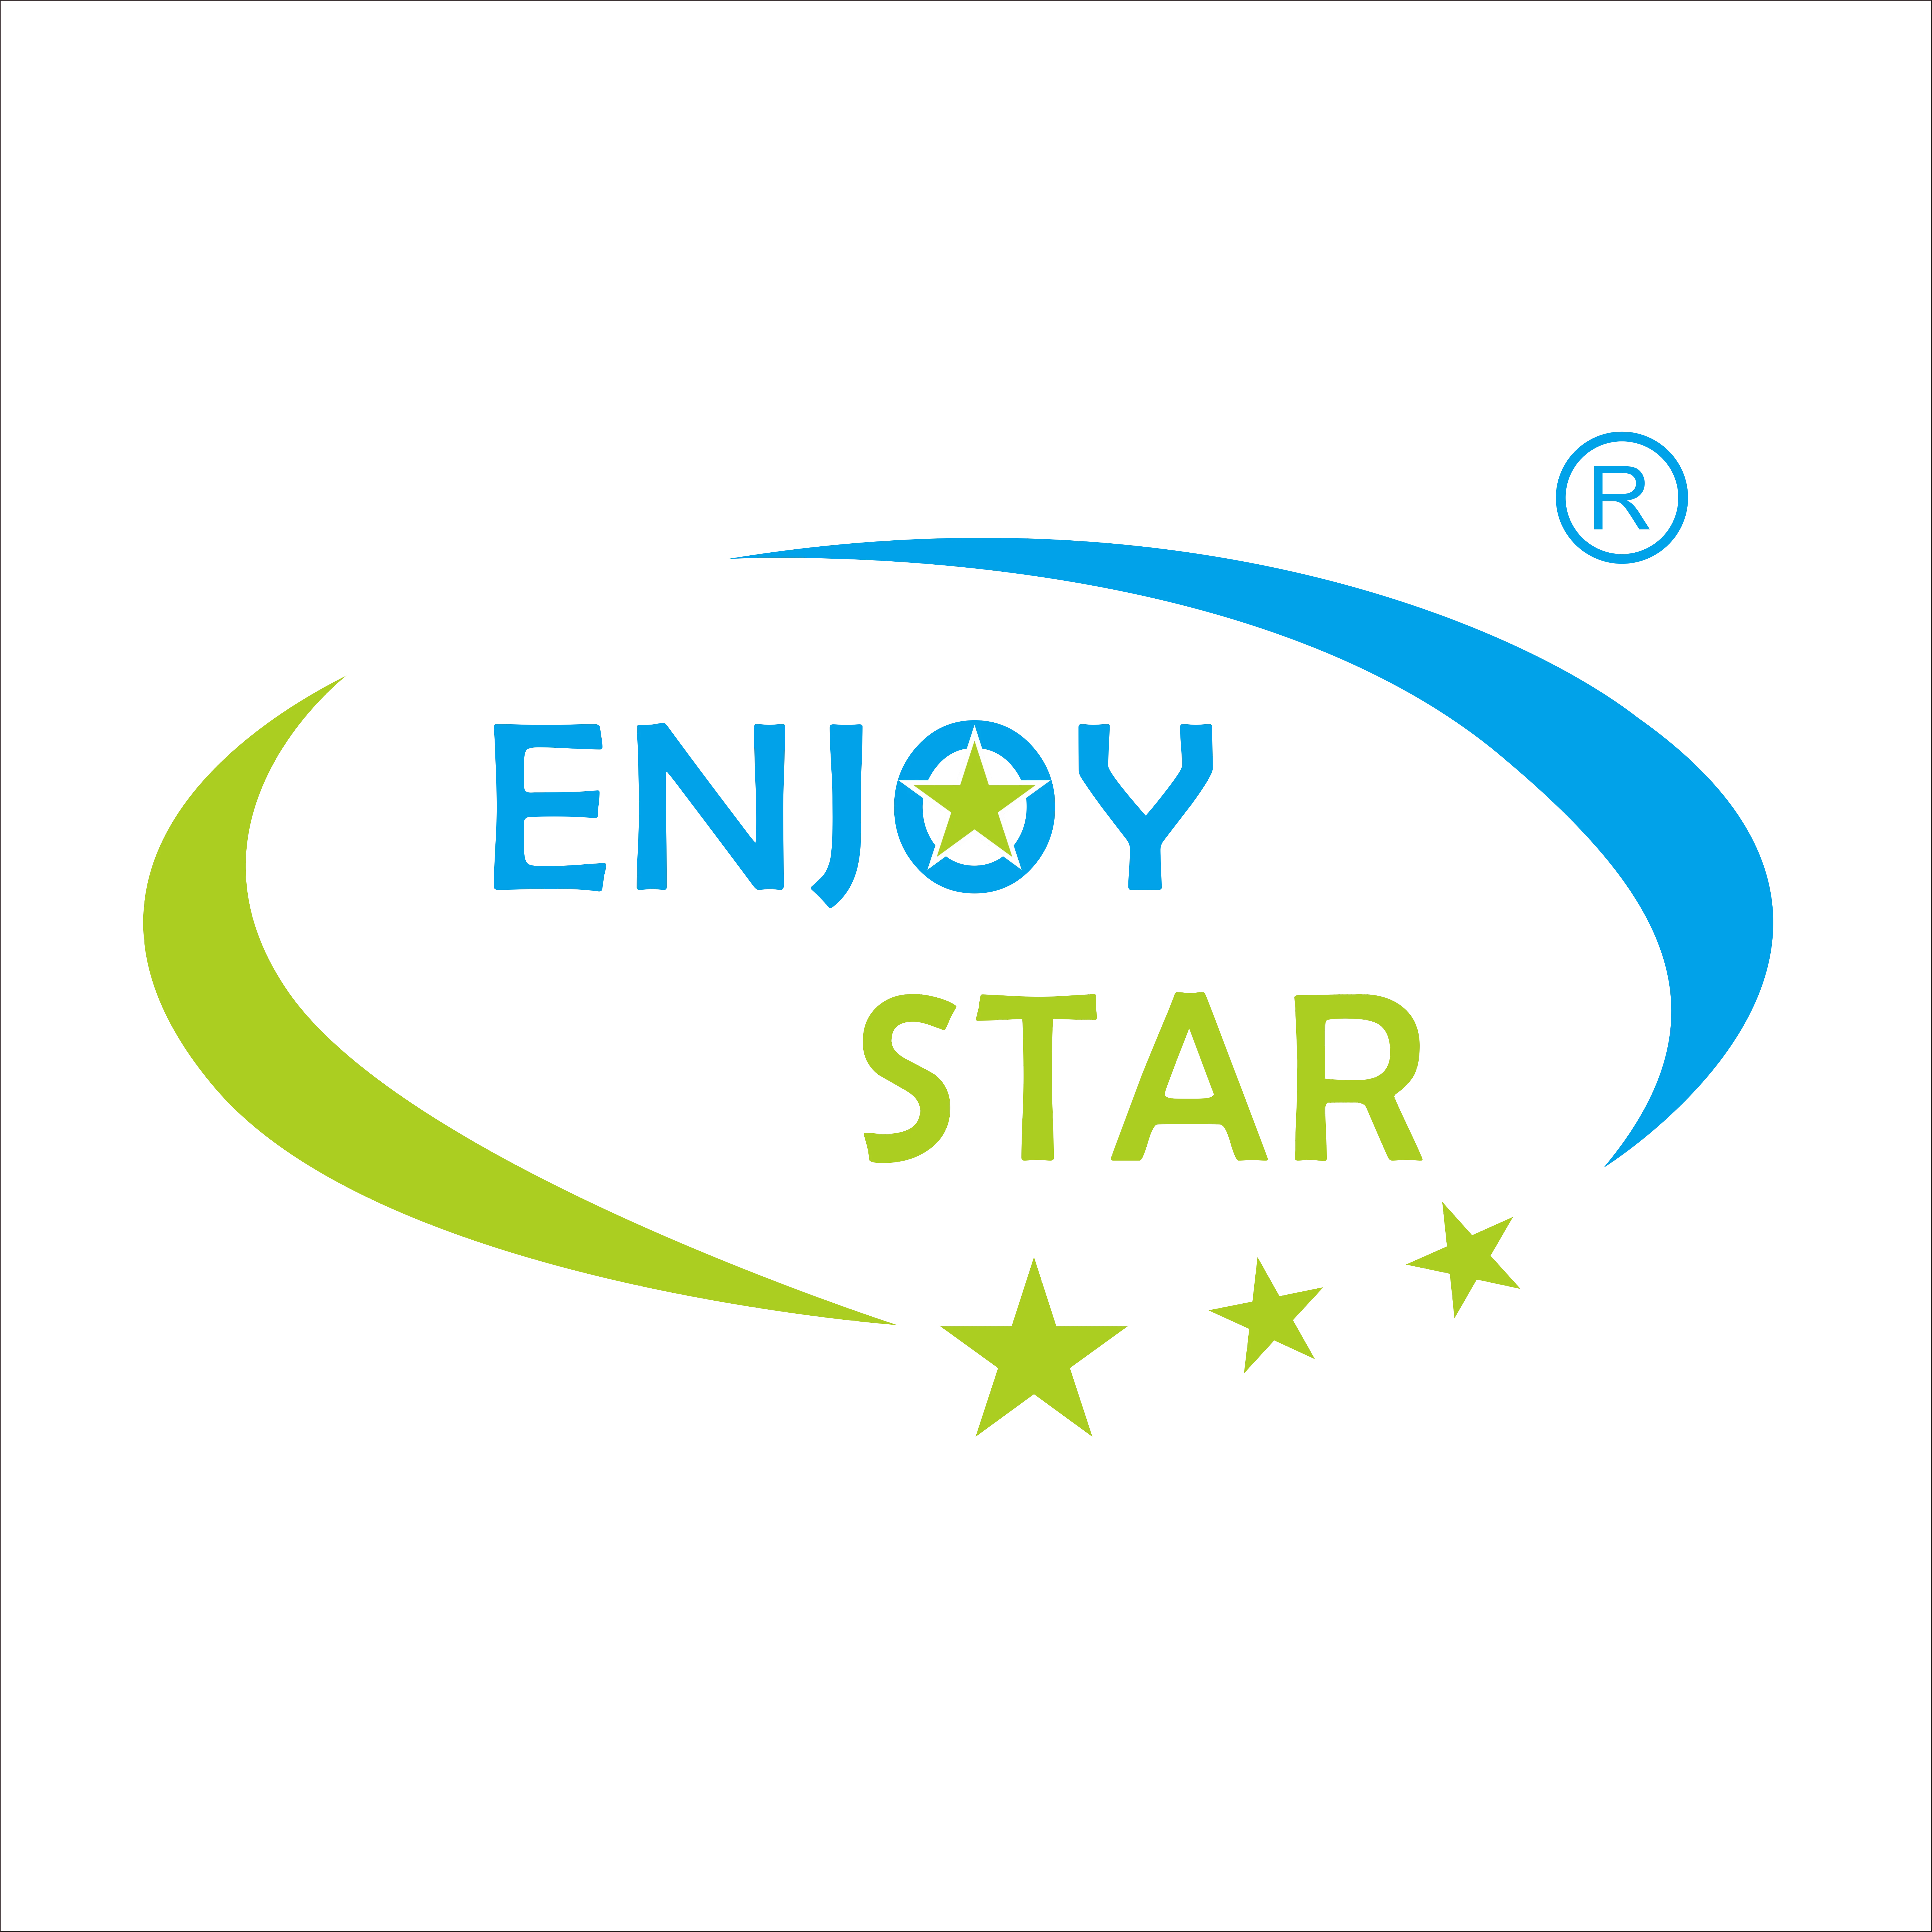 ENJOY STAR